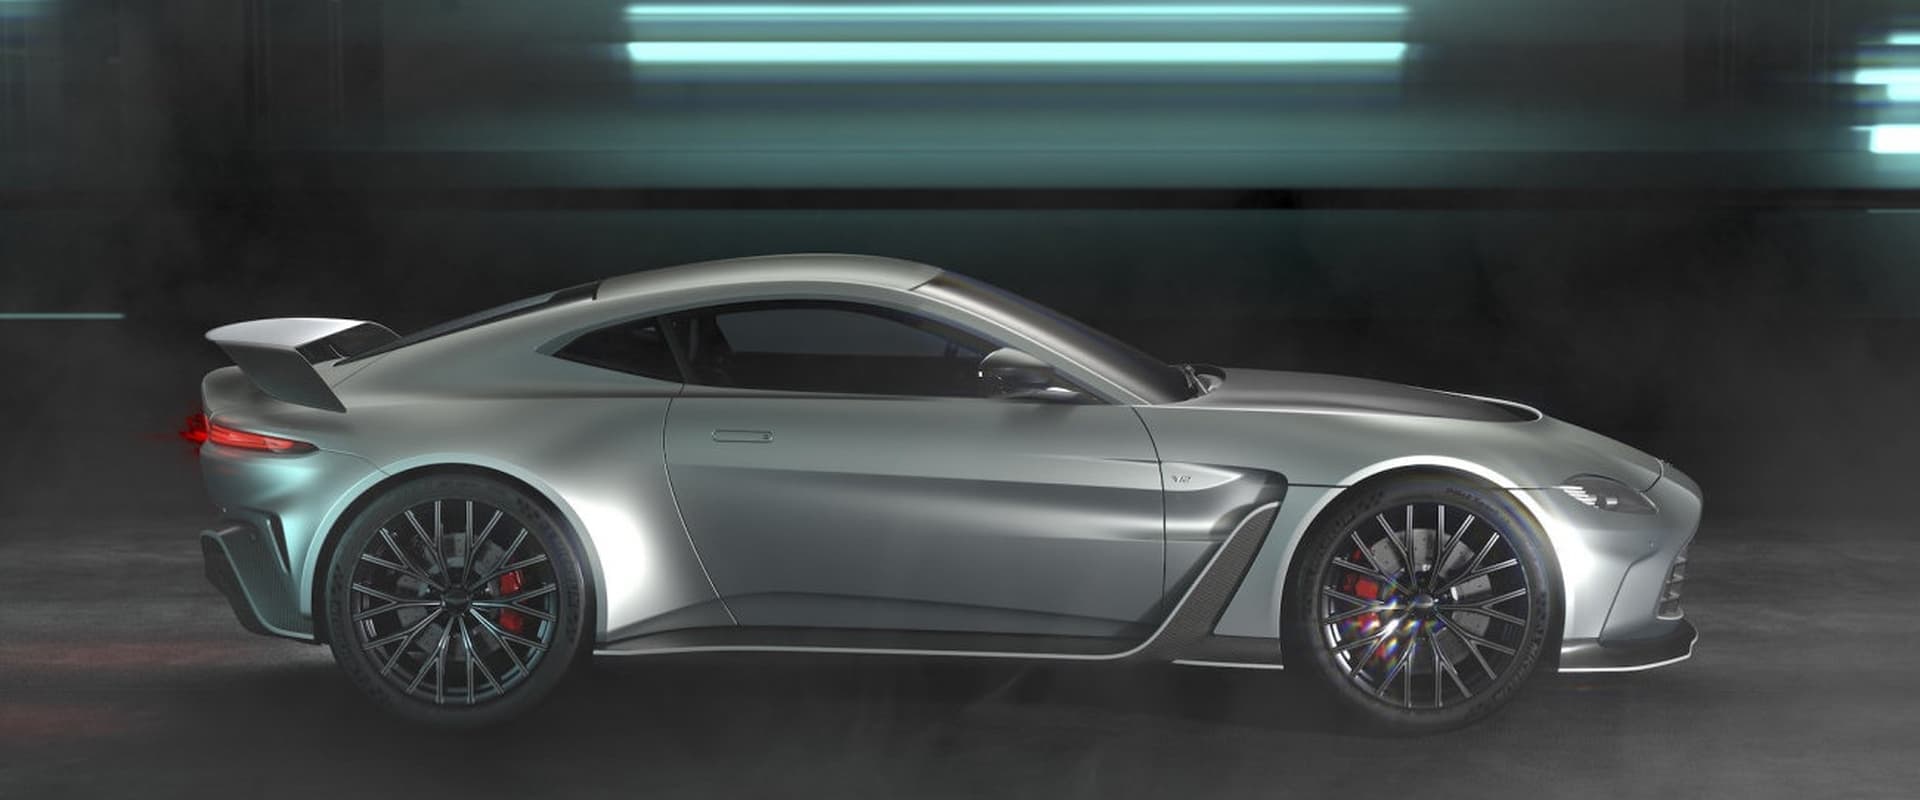 Aston Martin: Sophistication on Wheels